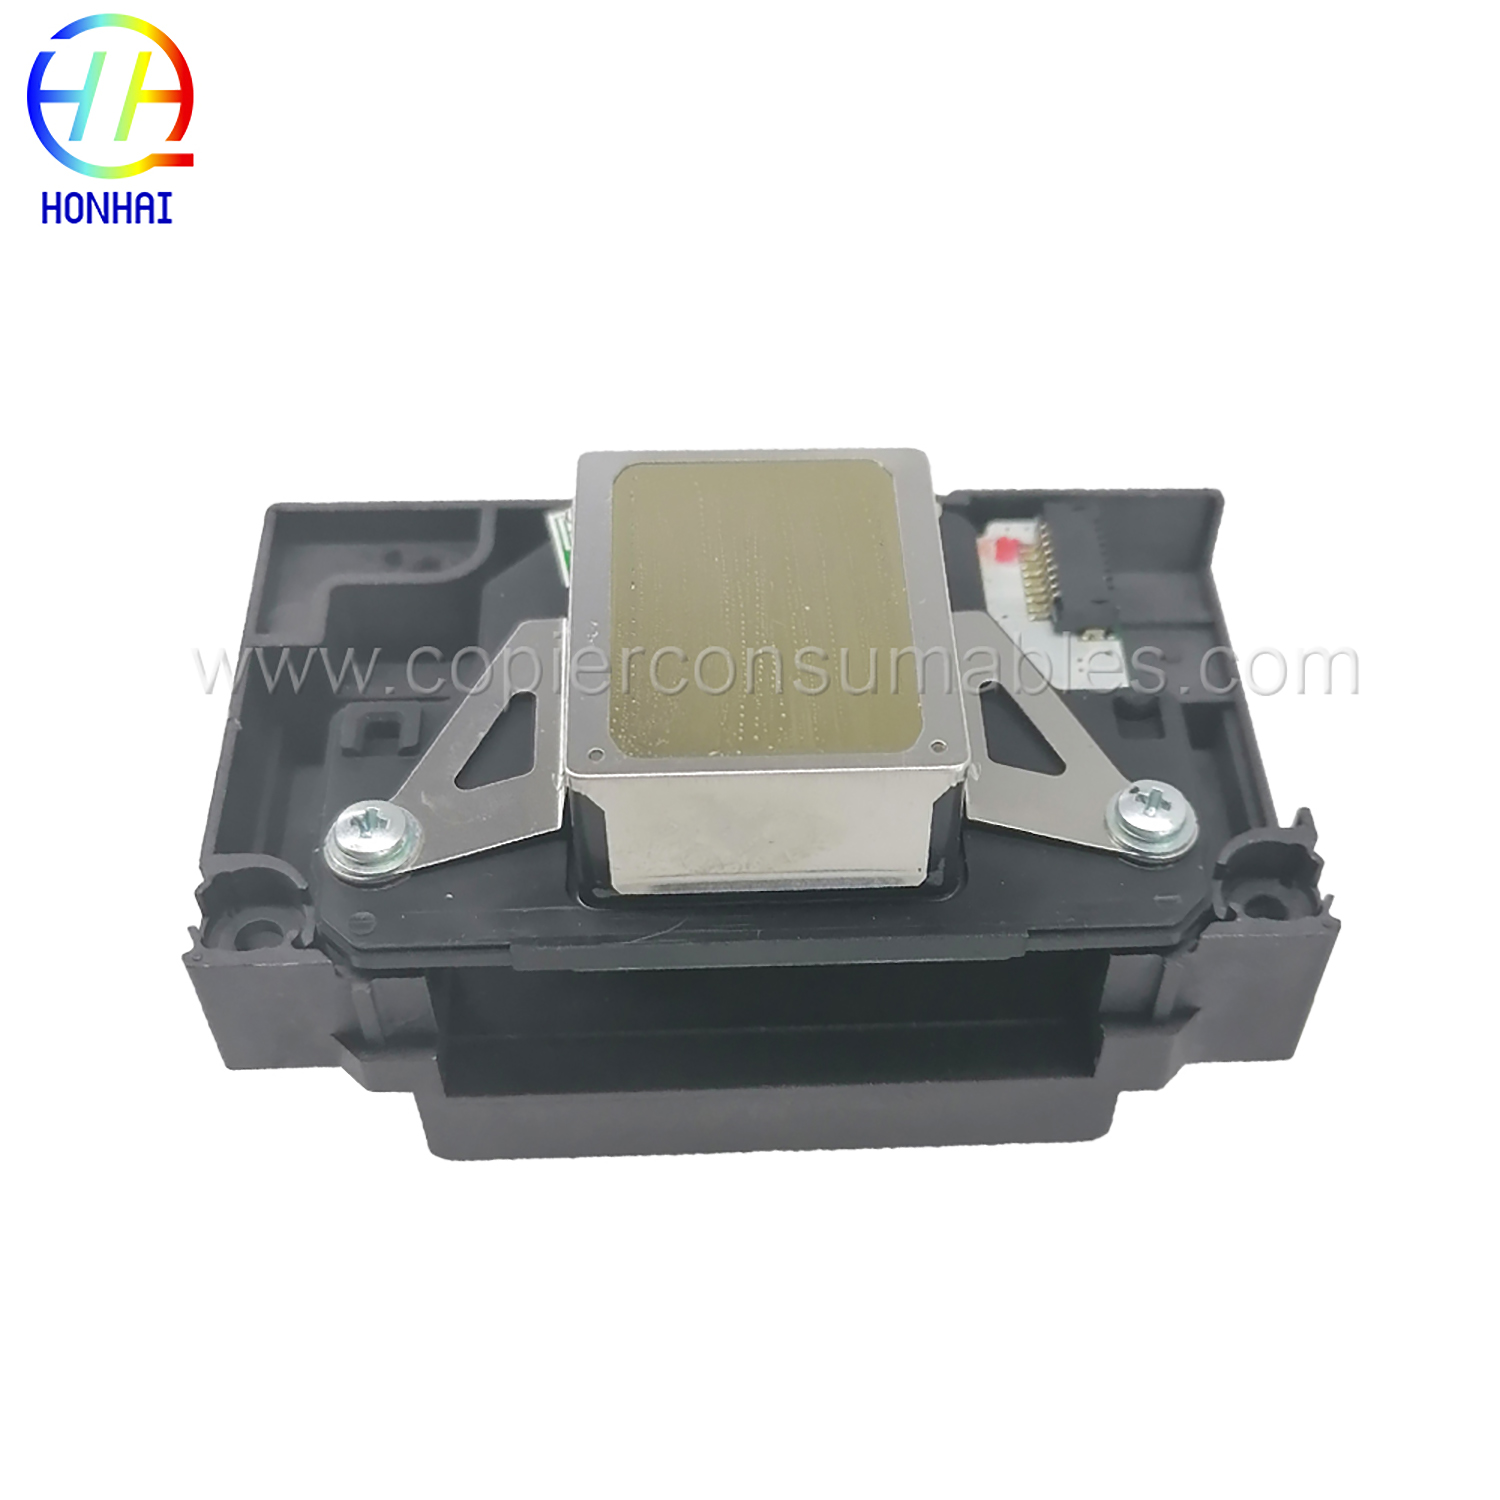 Printhead Compatible for Epson L1800 1410 1430 1500W